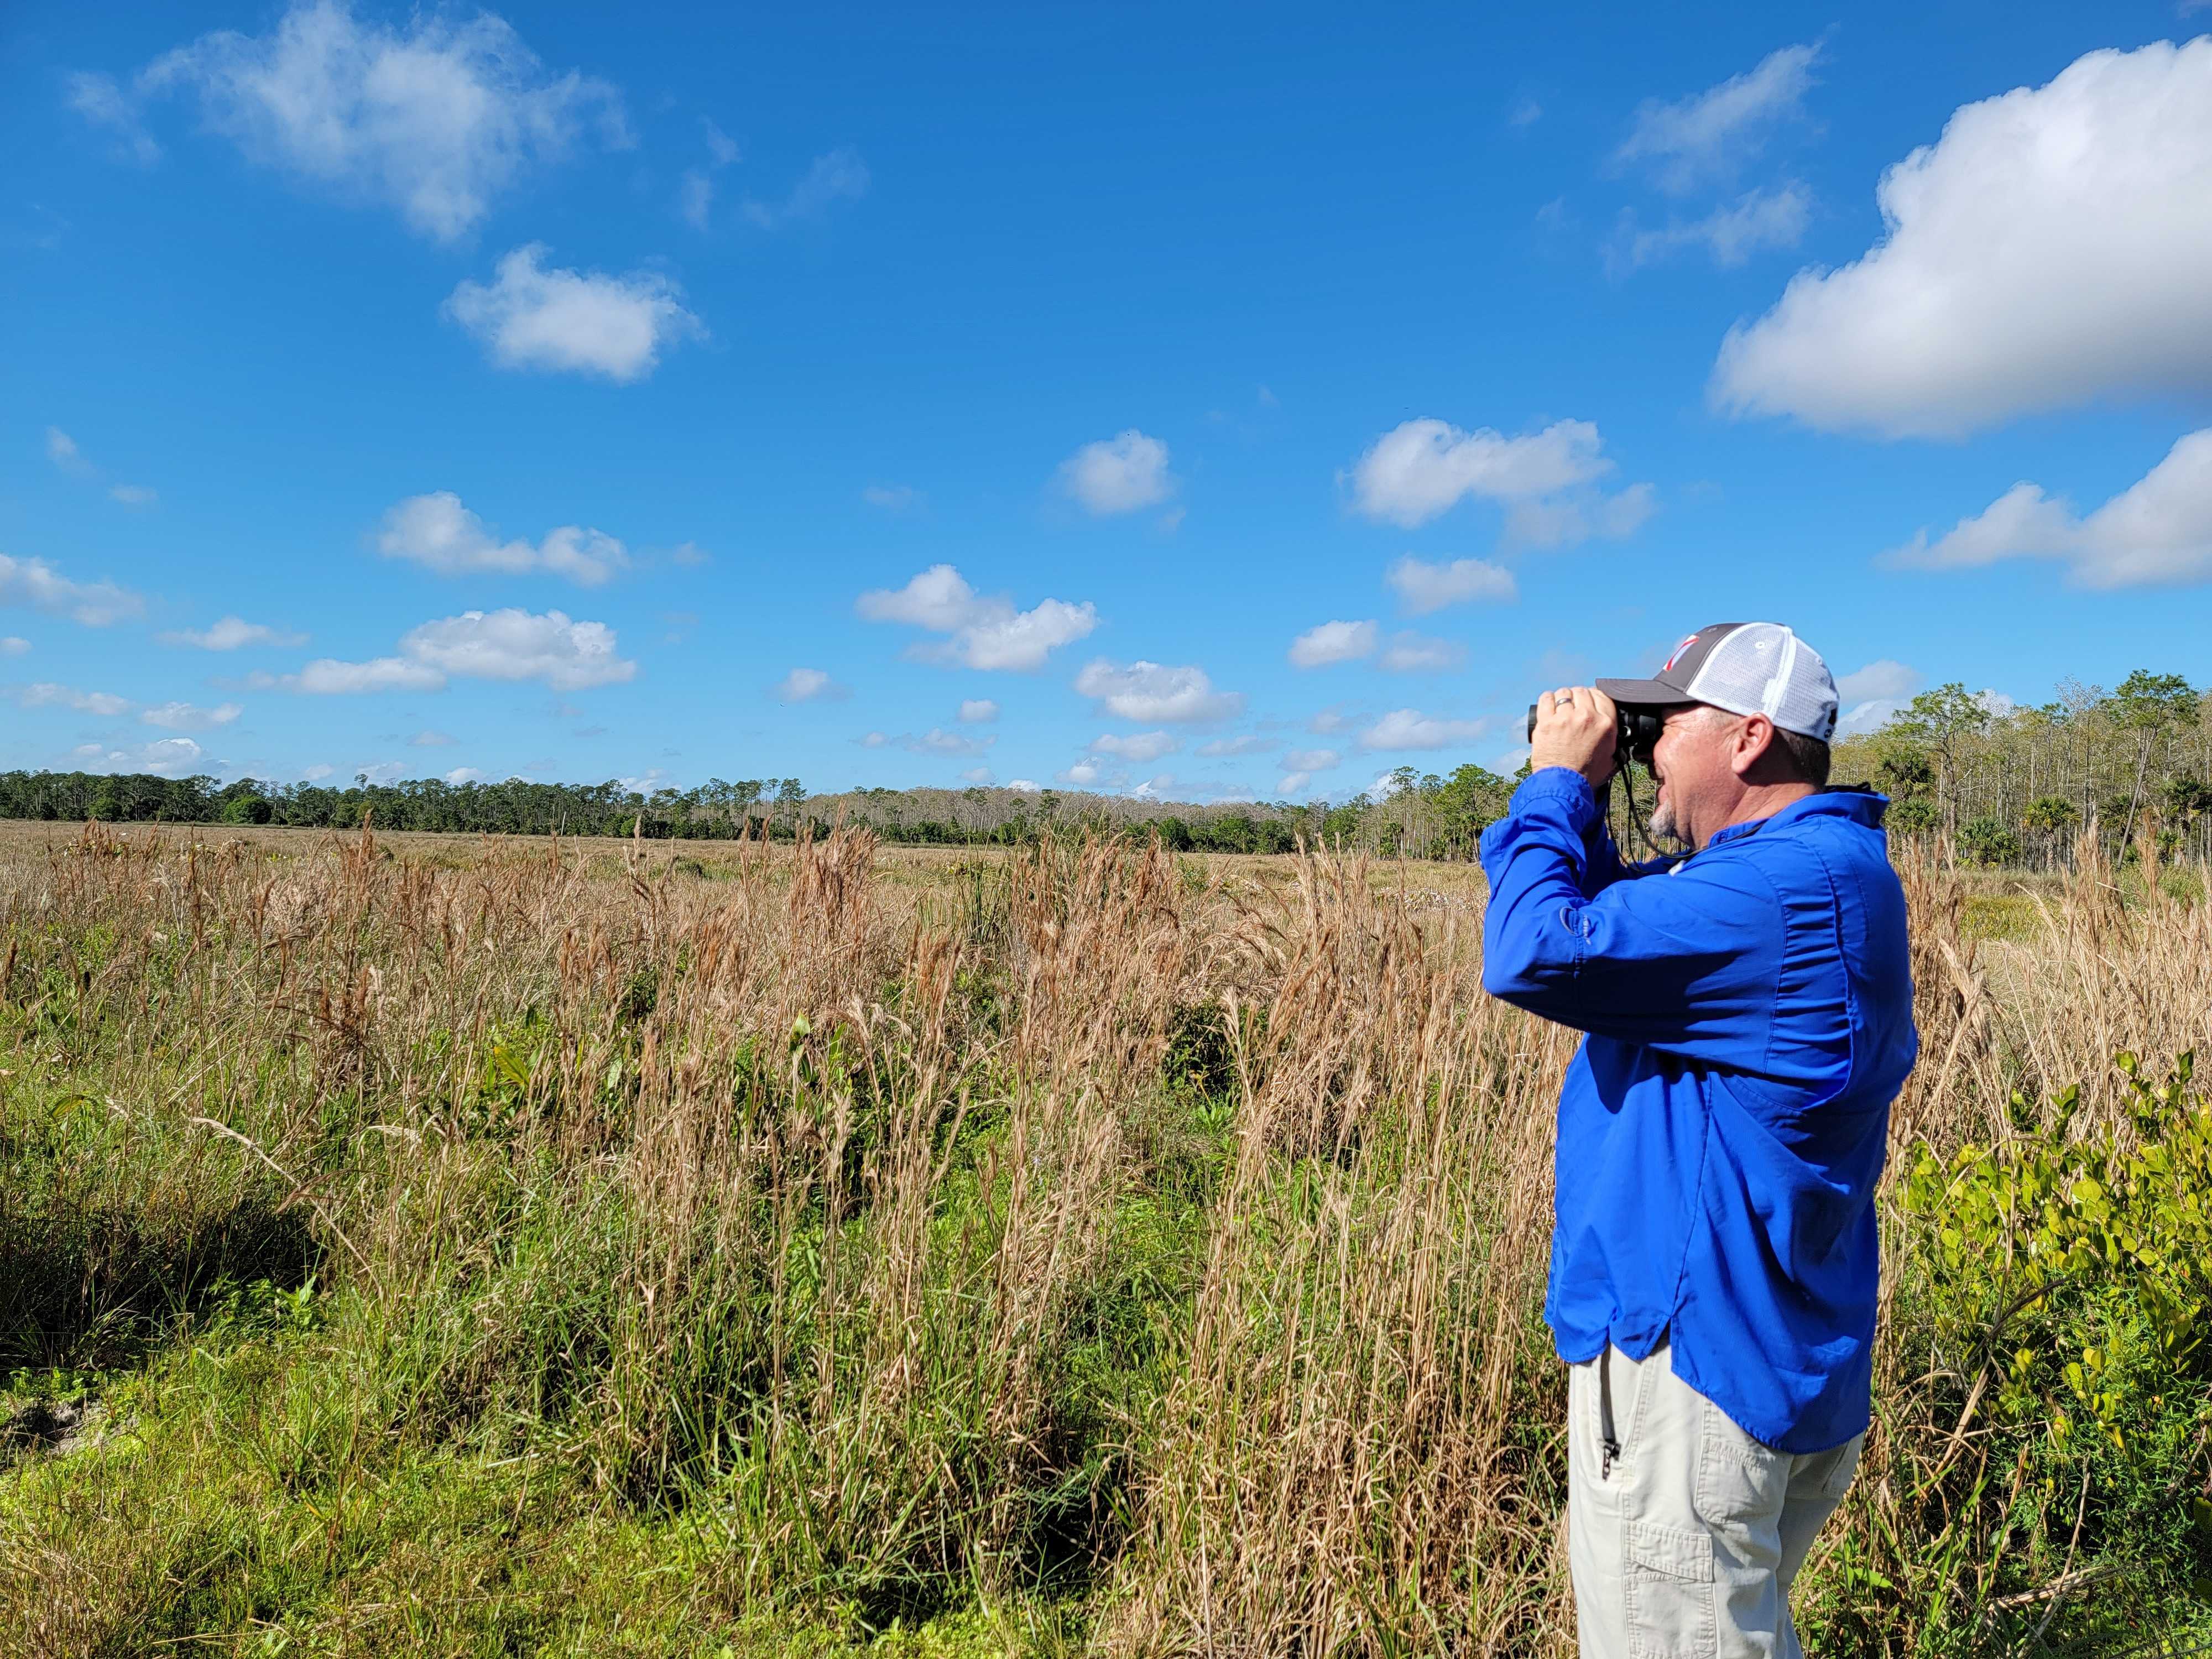 A man with binoculars in a field.